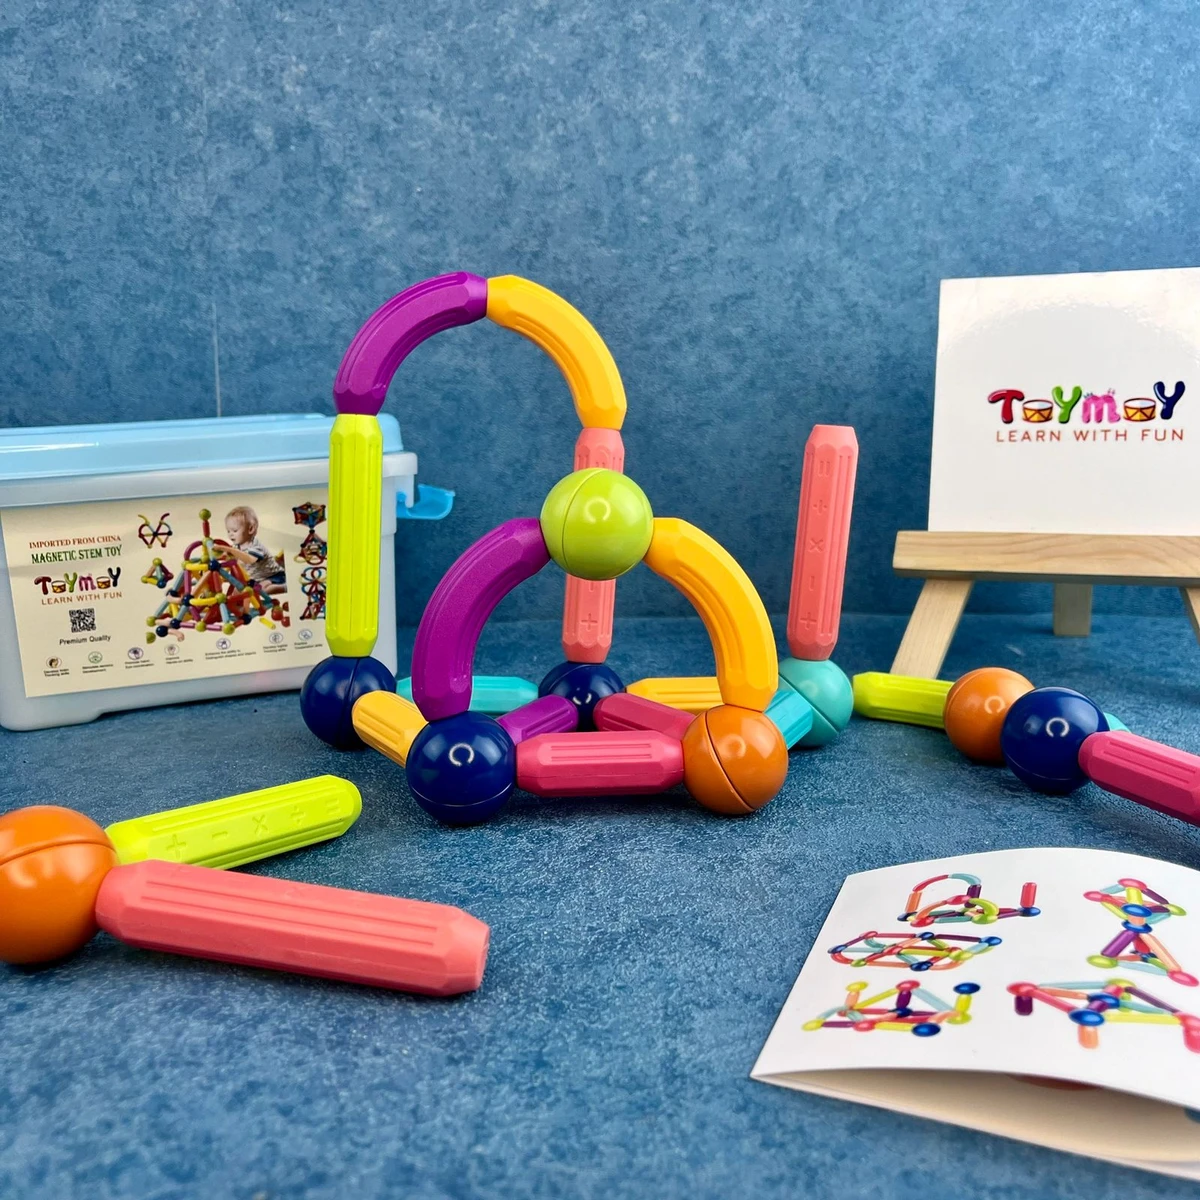 Premium Quality Magnetic Stick STEM educational toys for Kids- 64 pcs